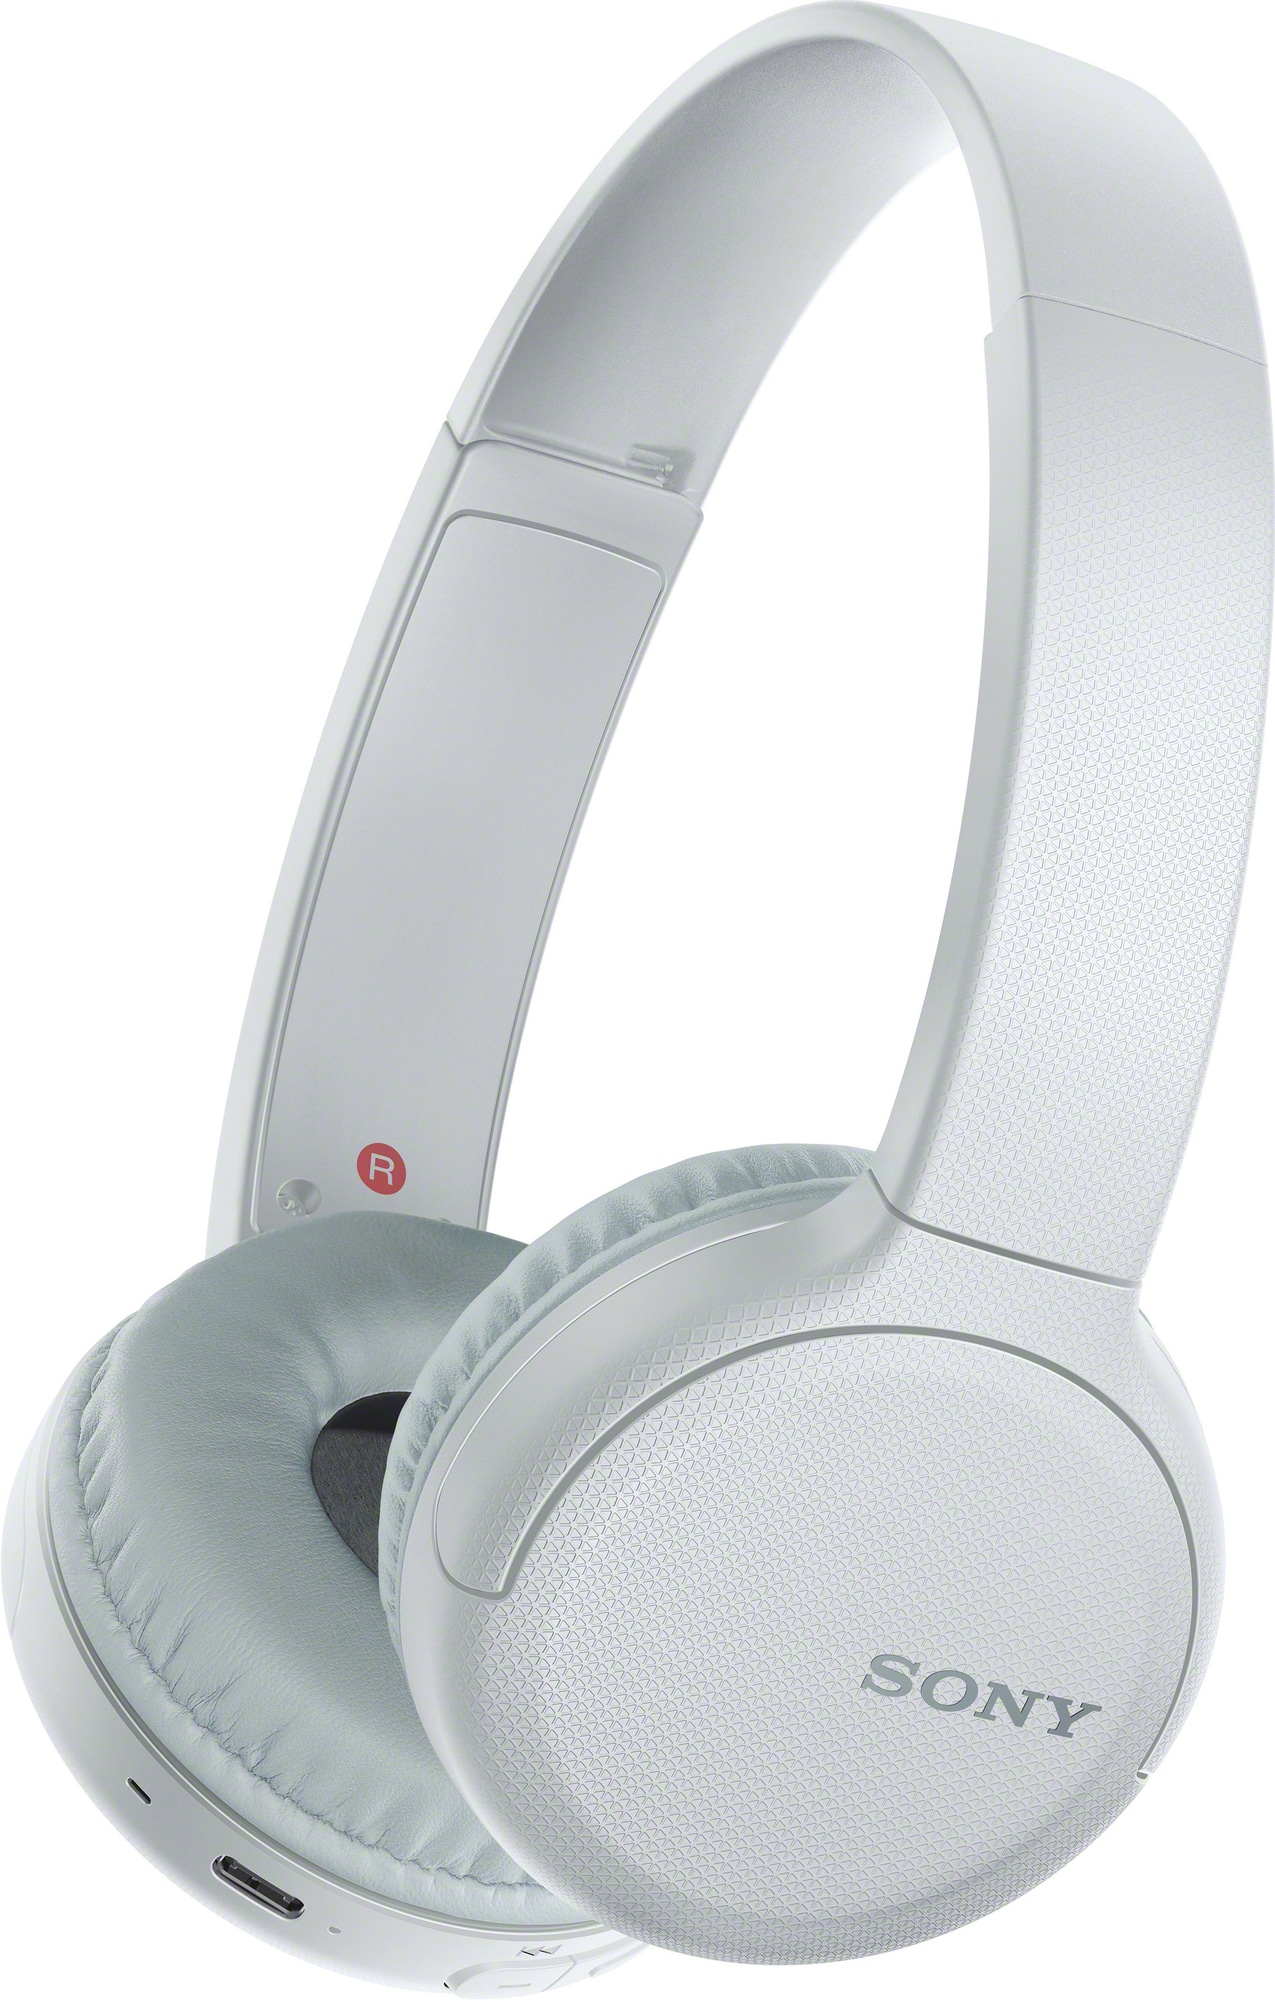 Sony WH-CH510 trådlösa on ear-hörlurar (vita) - Elgiganten